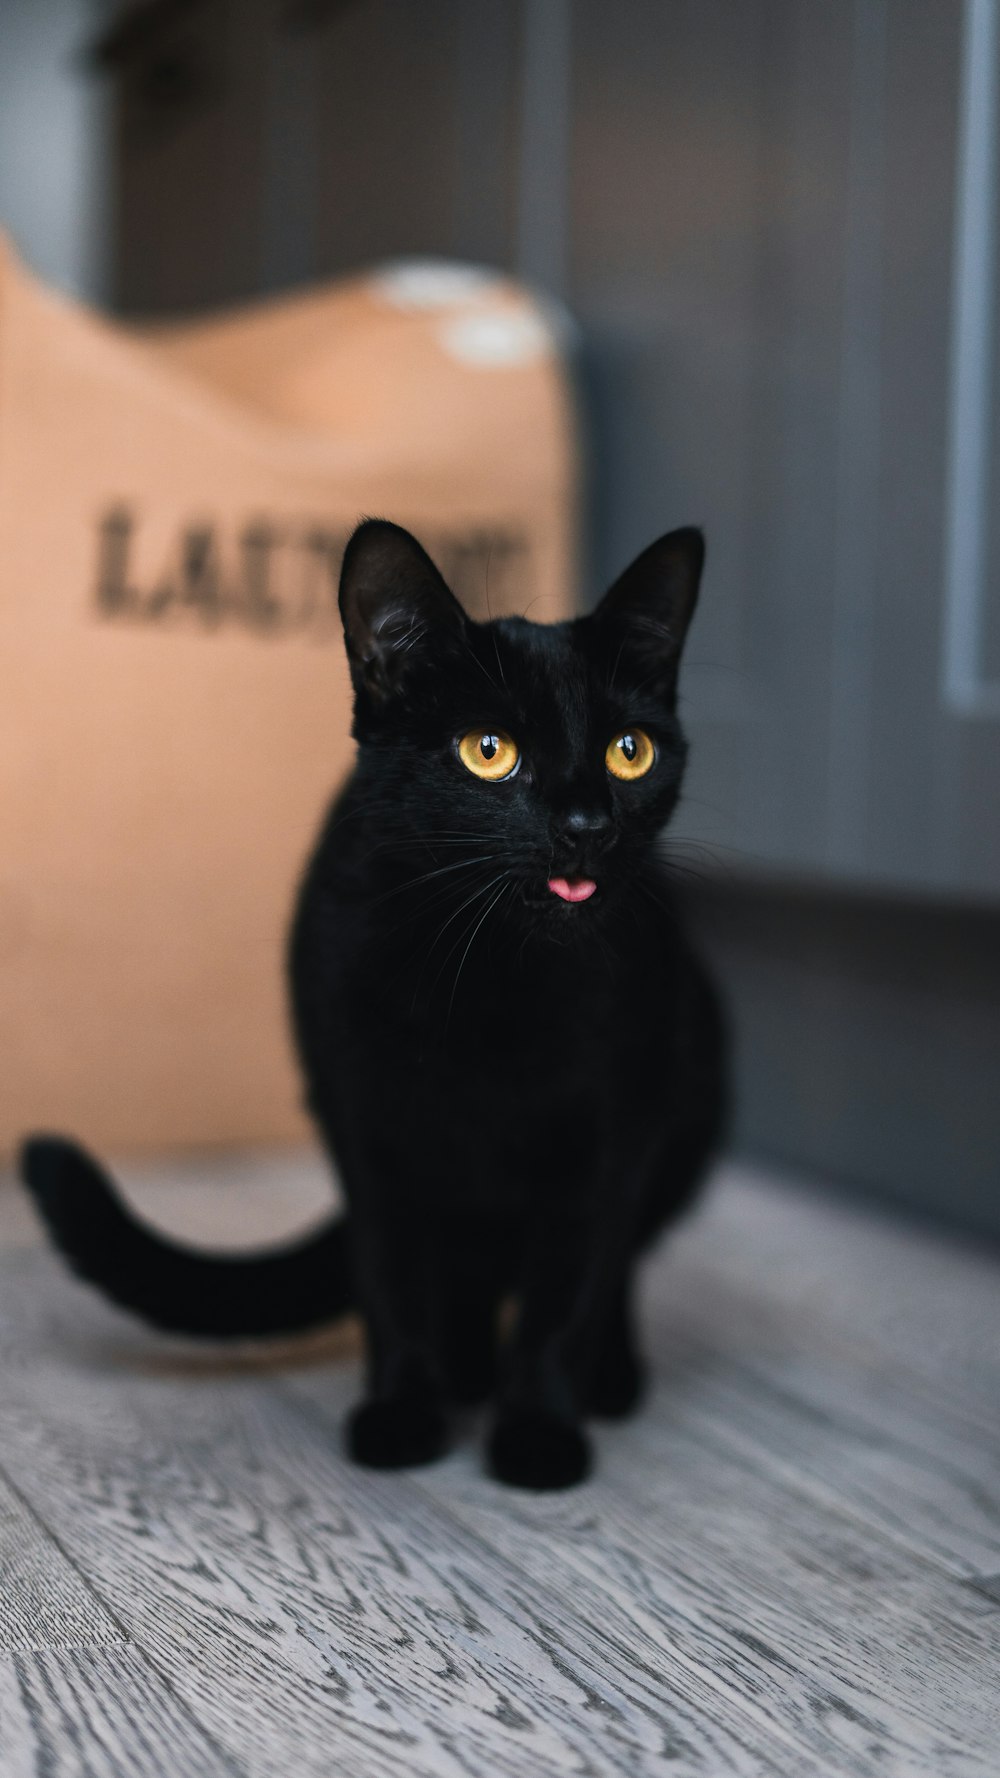 Black cat on white floor photo – Free Cat Image on Unsplash